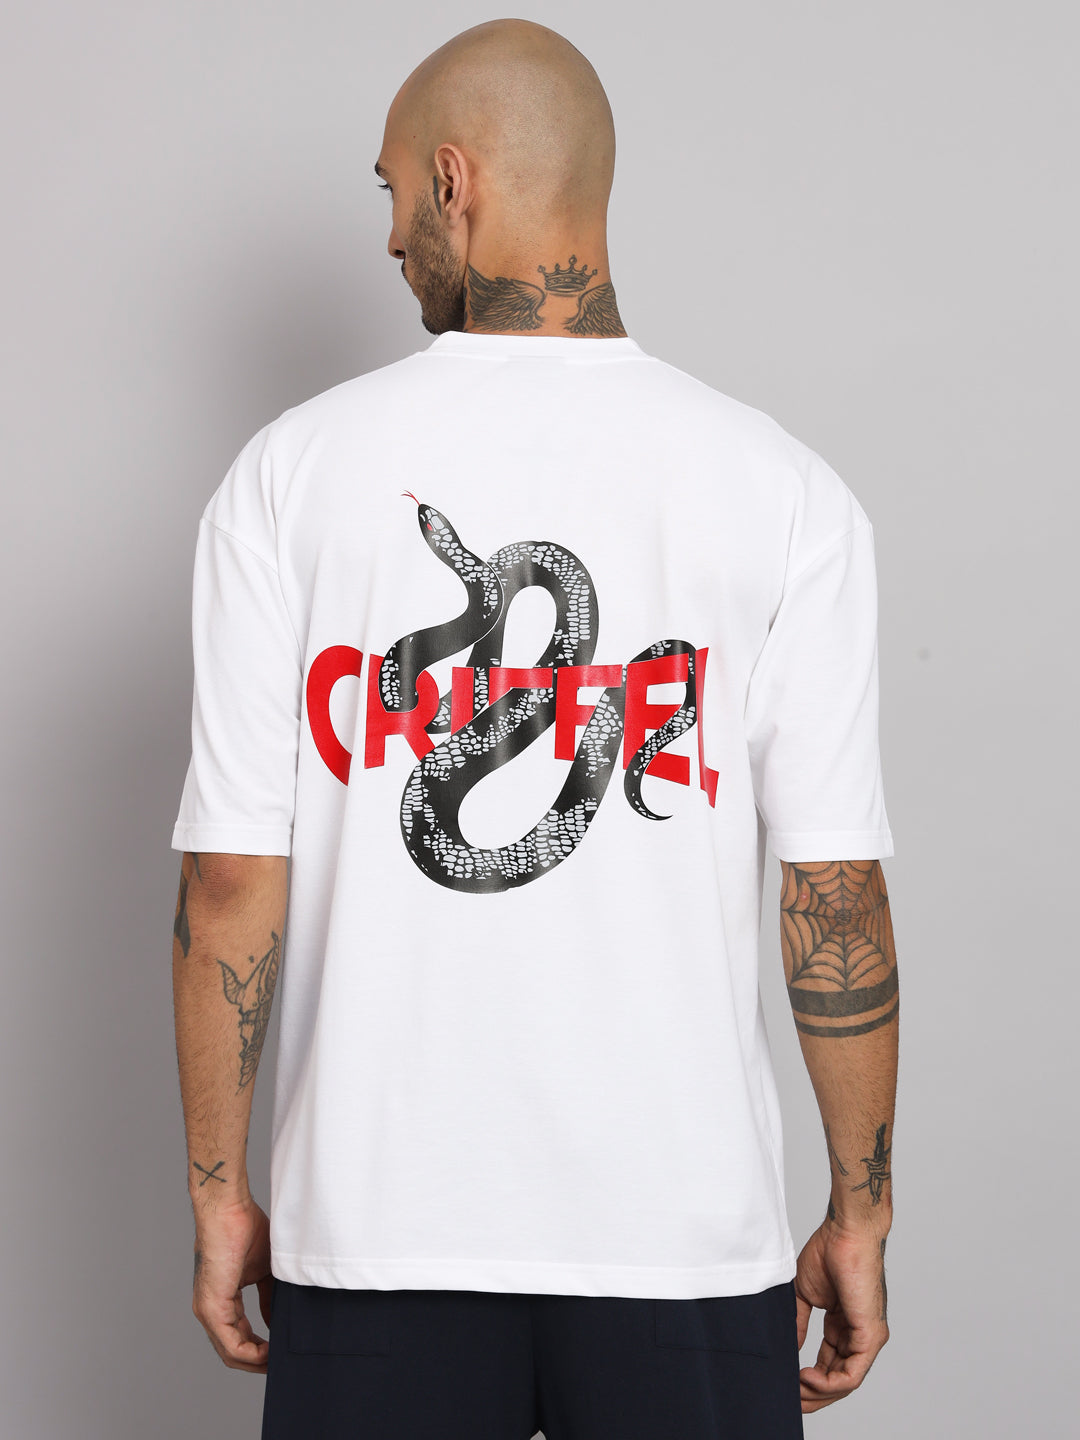 GRIFFEL Men REFLECTIVE SNAKE Printed White Loosefit Cotton T-shirt - griffel